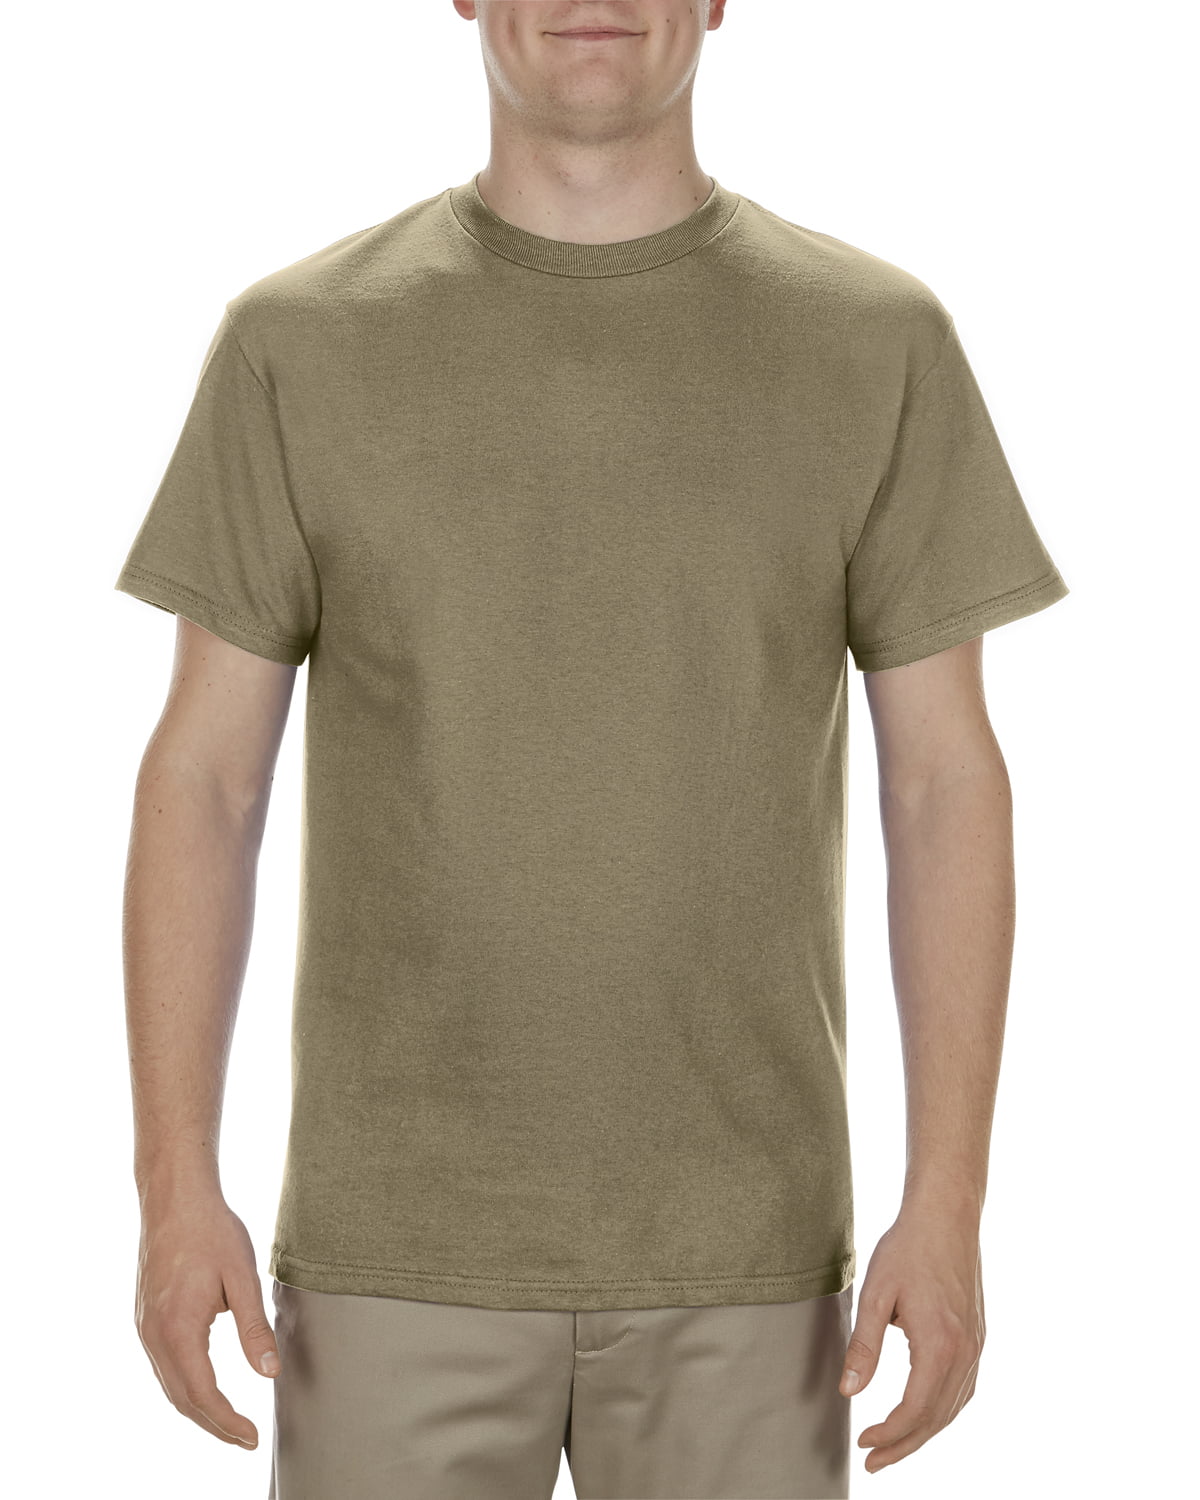 Alstyle AL1901 Adult 5.1 oz., - Cotton Navy - T-Shirt Heather Large 100